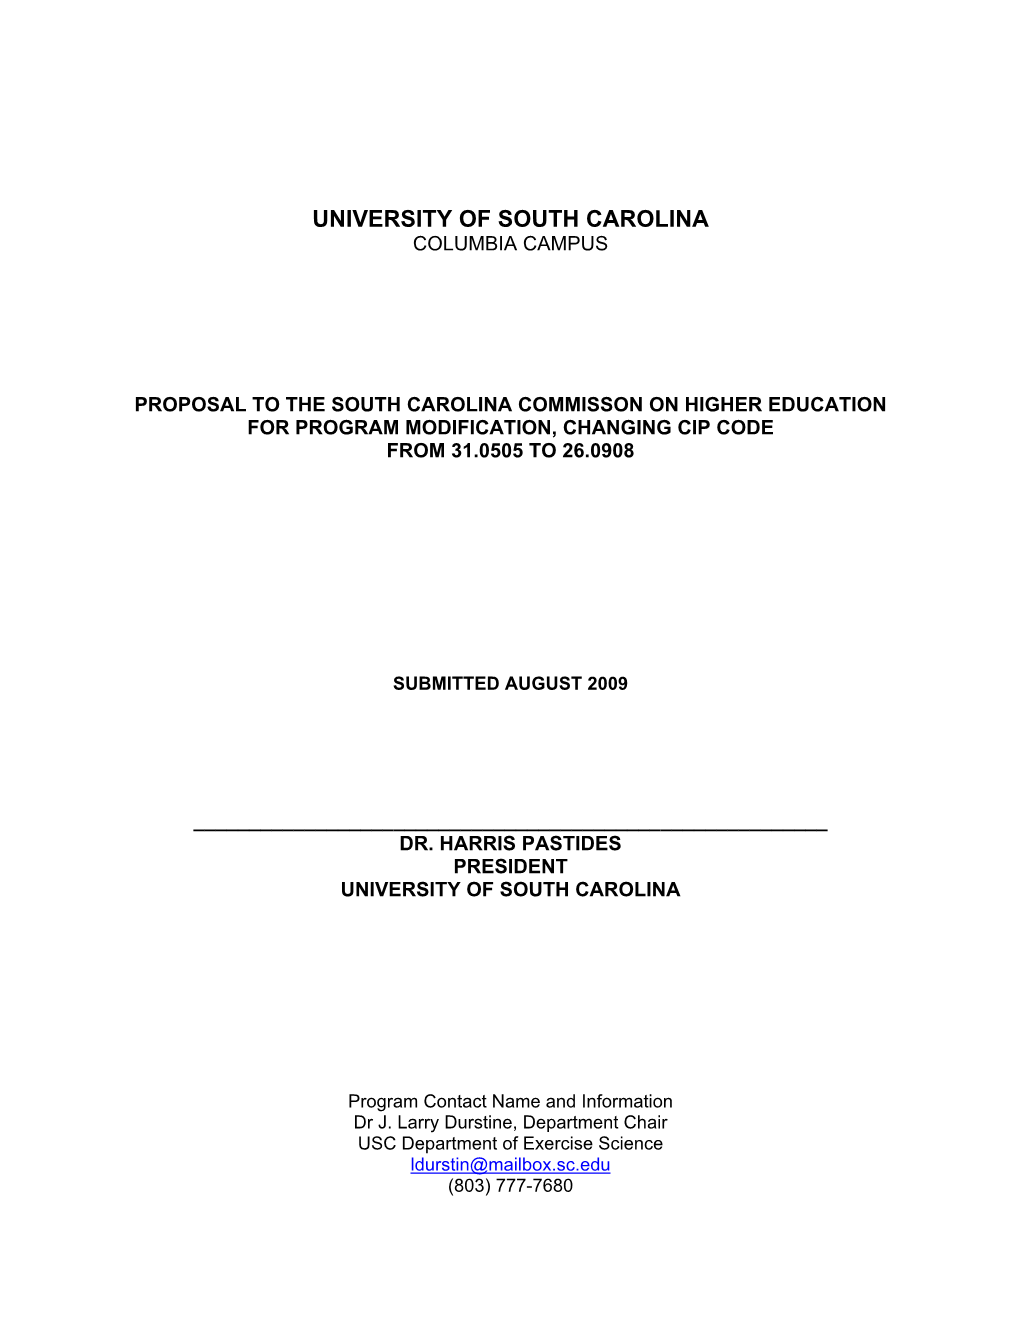 University of South Carolina Columbia Campus